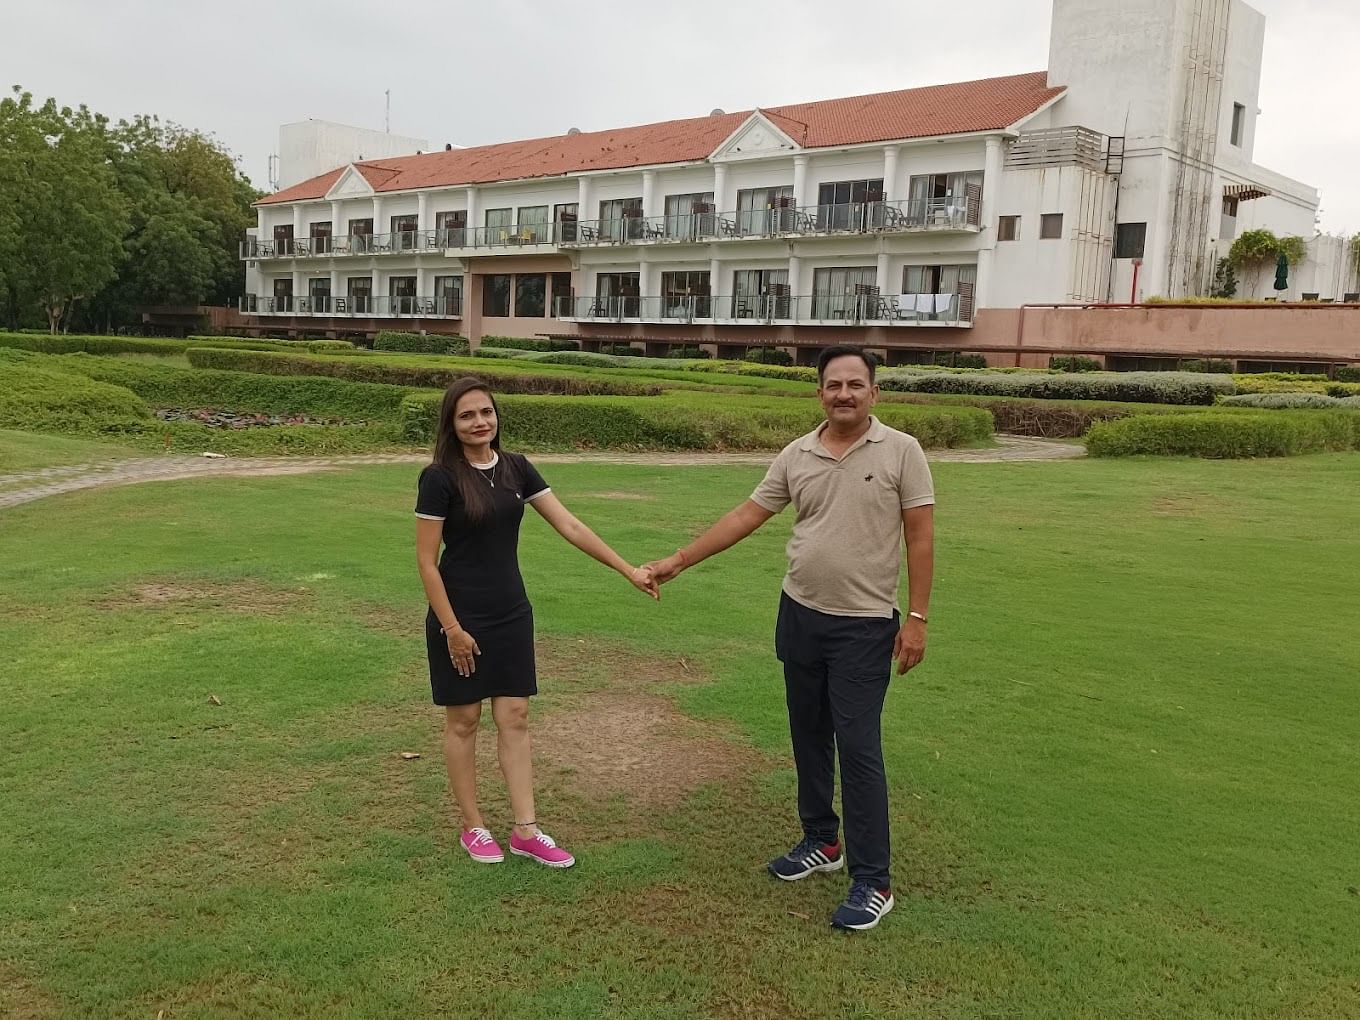 Club Mahindra Kensville Golf Resort in Baldana Village, Ahmedabad